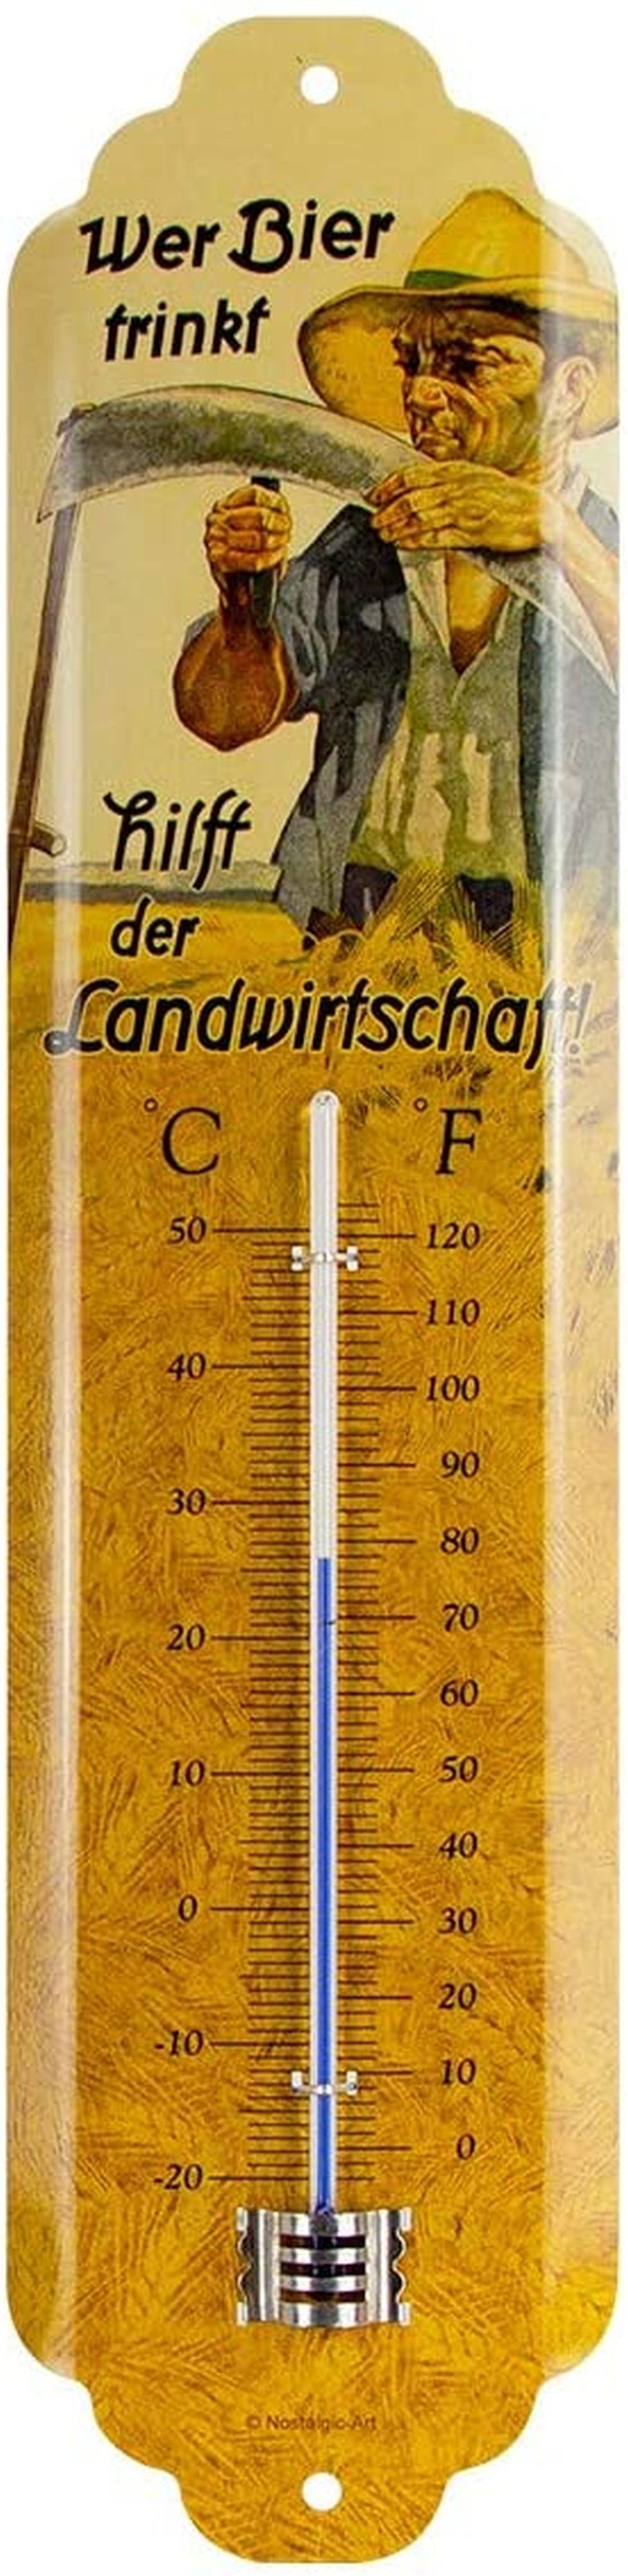 https://i.otto.de/i/otto/0203146d-7152-54d3-825b-bcbfd6369a4d/nostalgic-art-raumthermometer-retro-metall-thermometer-innen-aussen-analog-wer-bier-trinkt.jpg?$formatz$